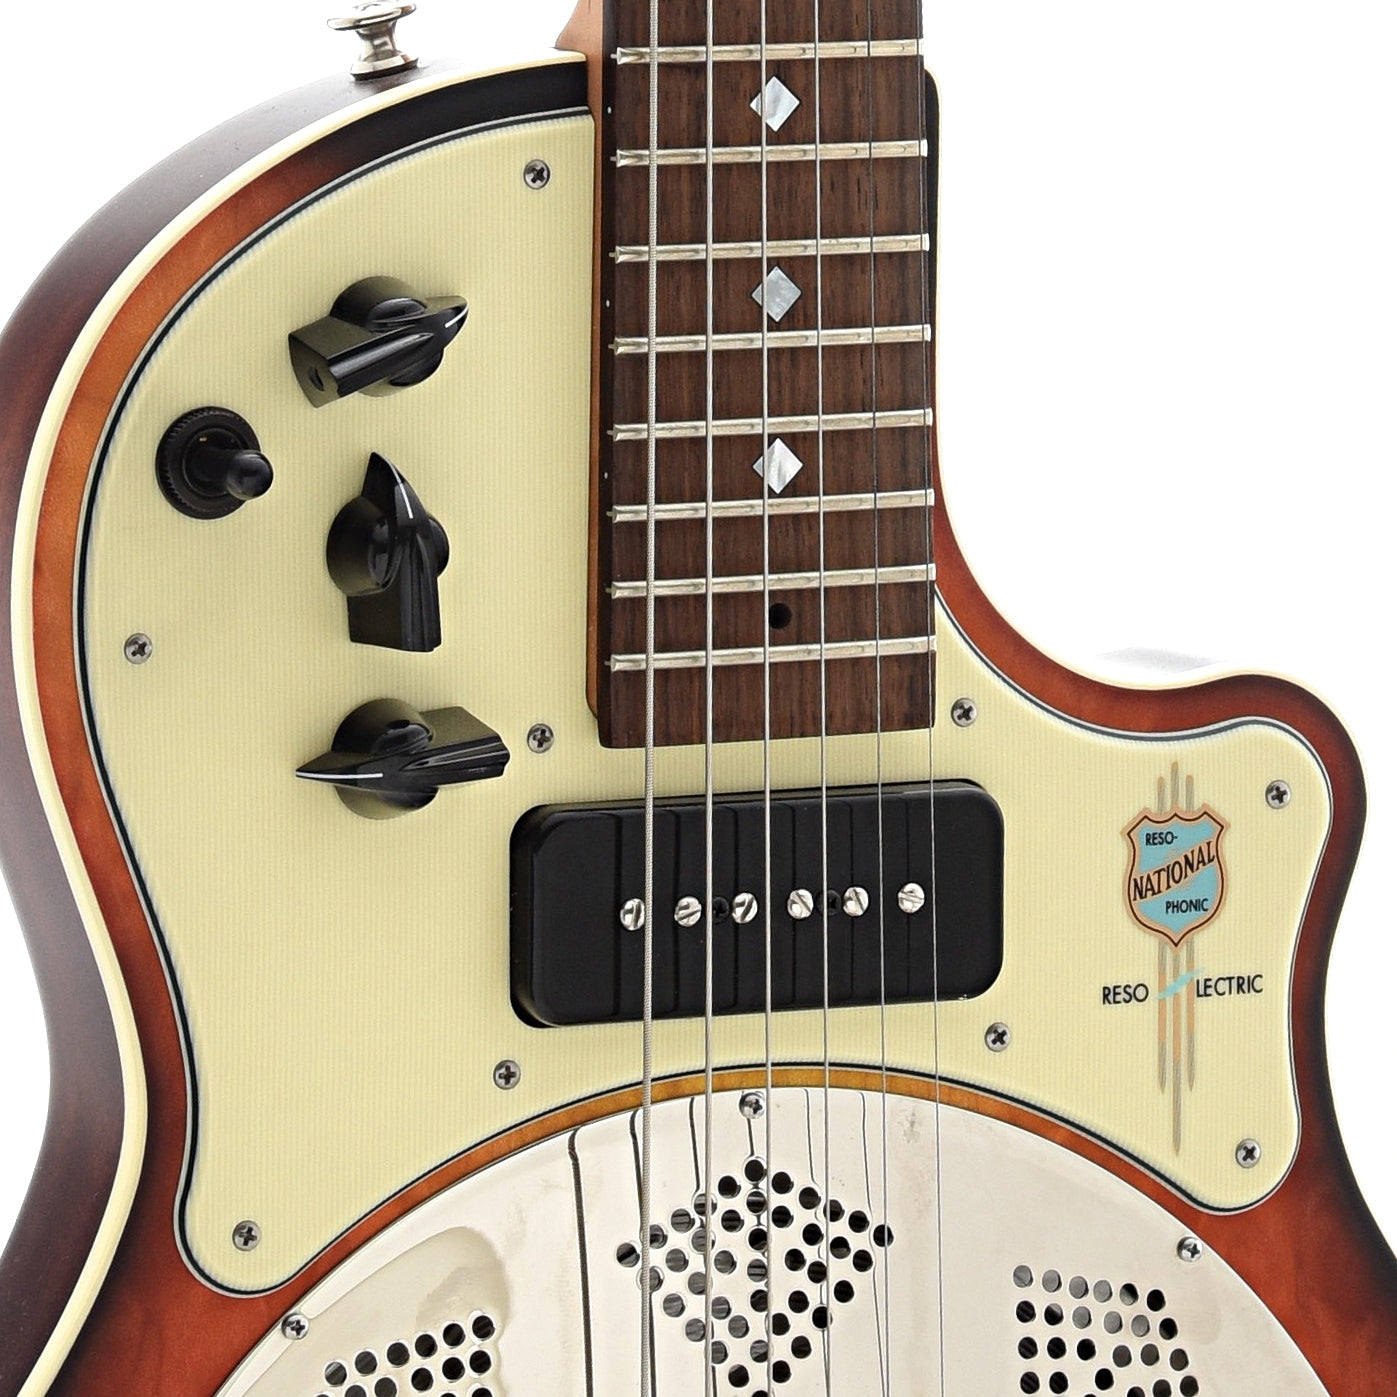 Image 4 of National Reso-Lectric & Case - SKU# NGRL3 : Product Type Resonator & Hawaiian Guitars : Elderly Instruments